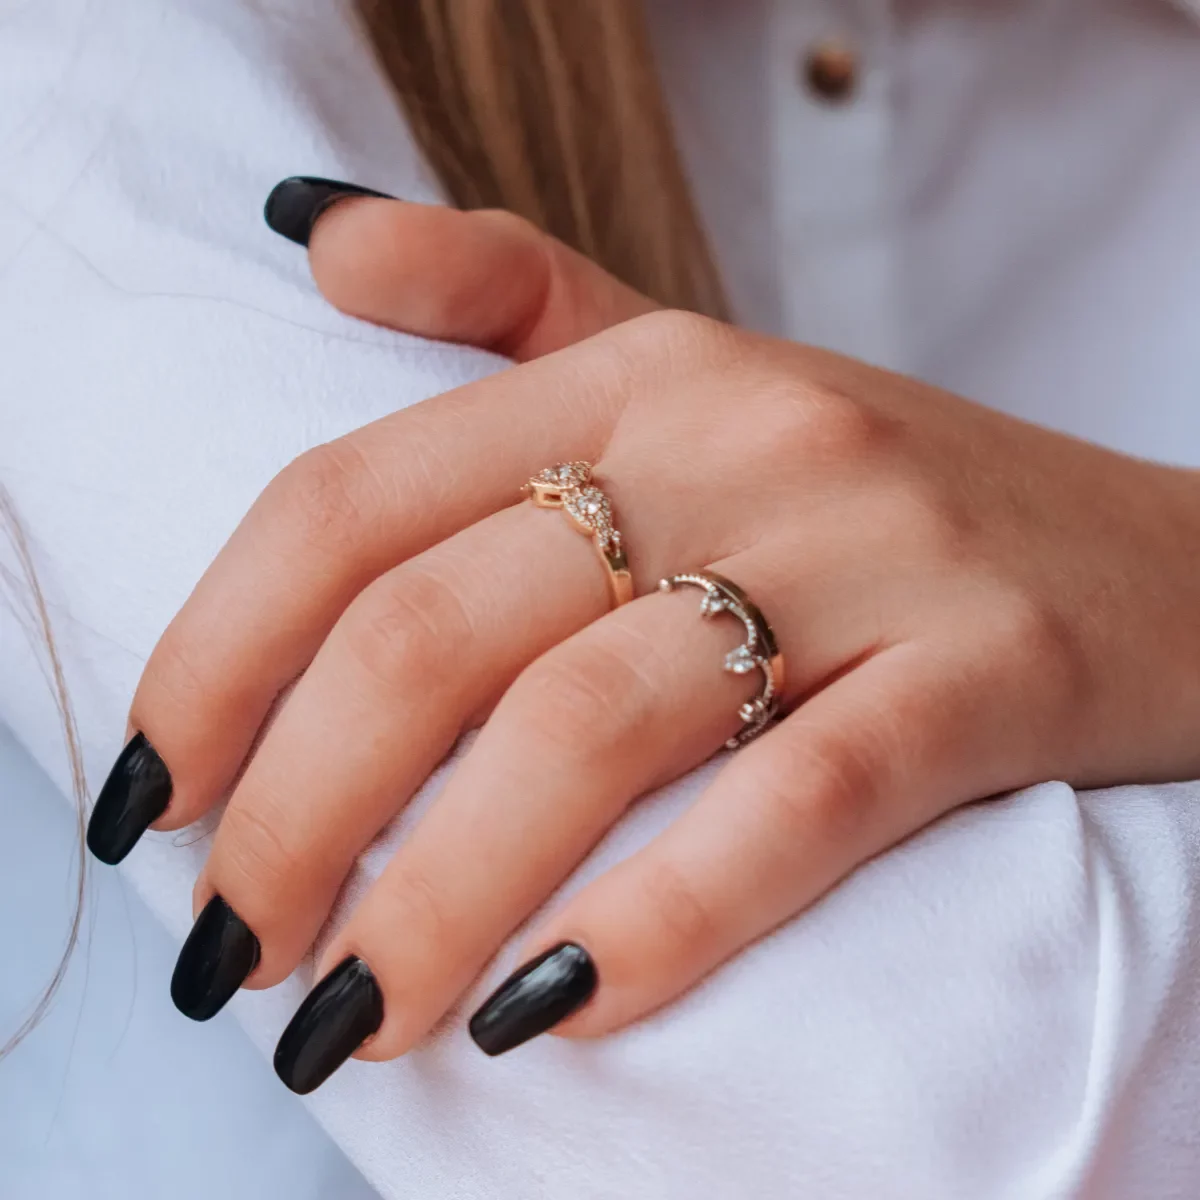 A hand with black nail polish